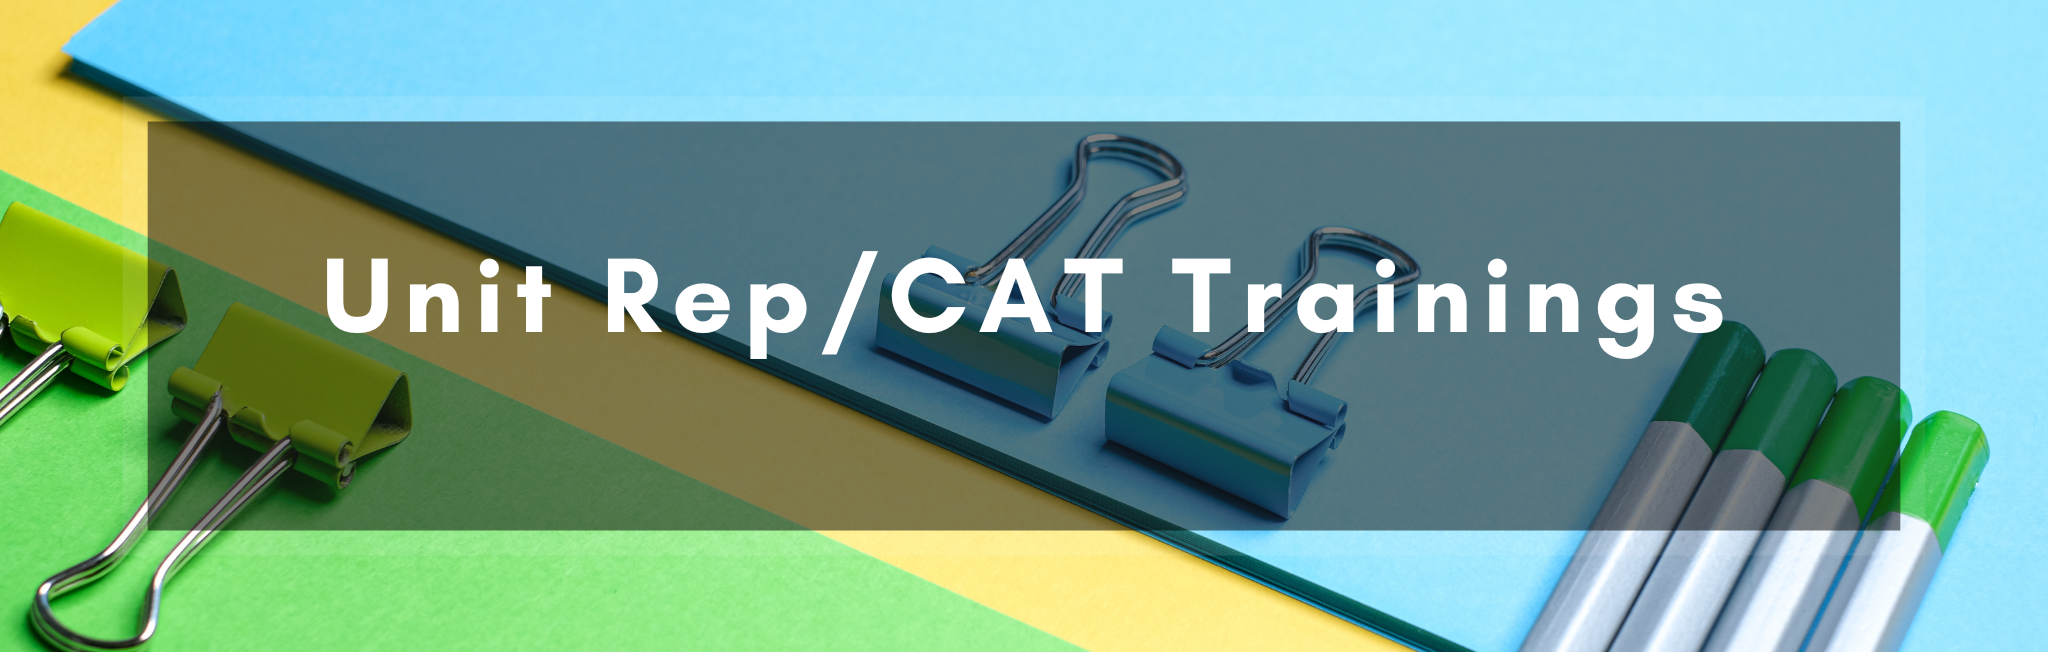 Unit Rep/CAT Trainings - April 17